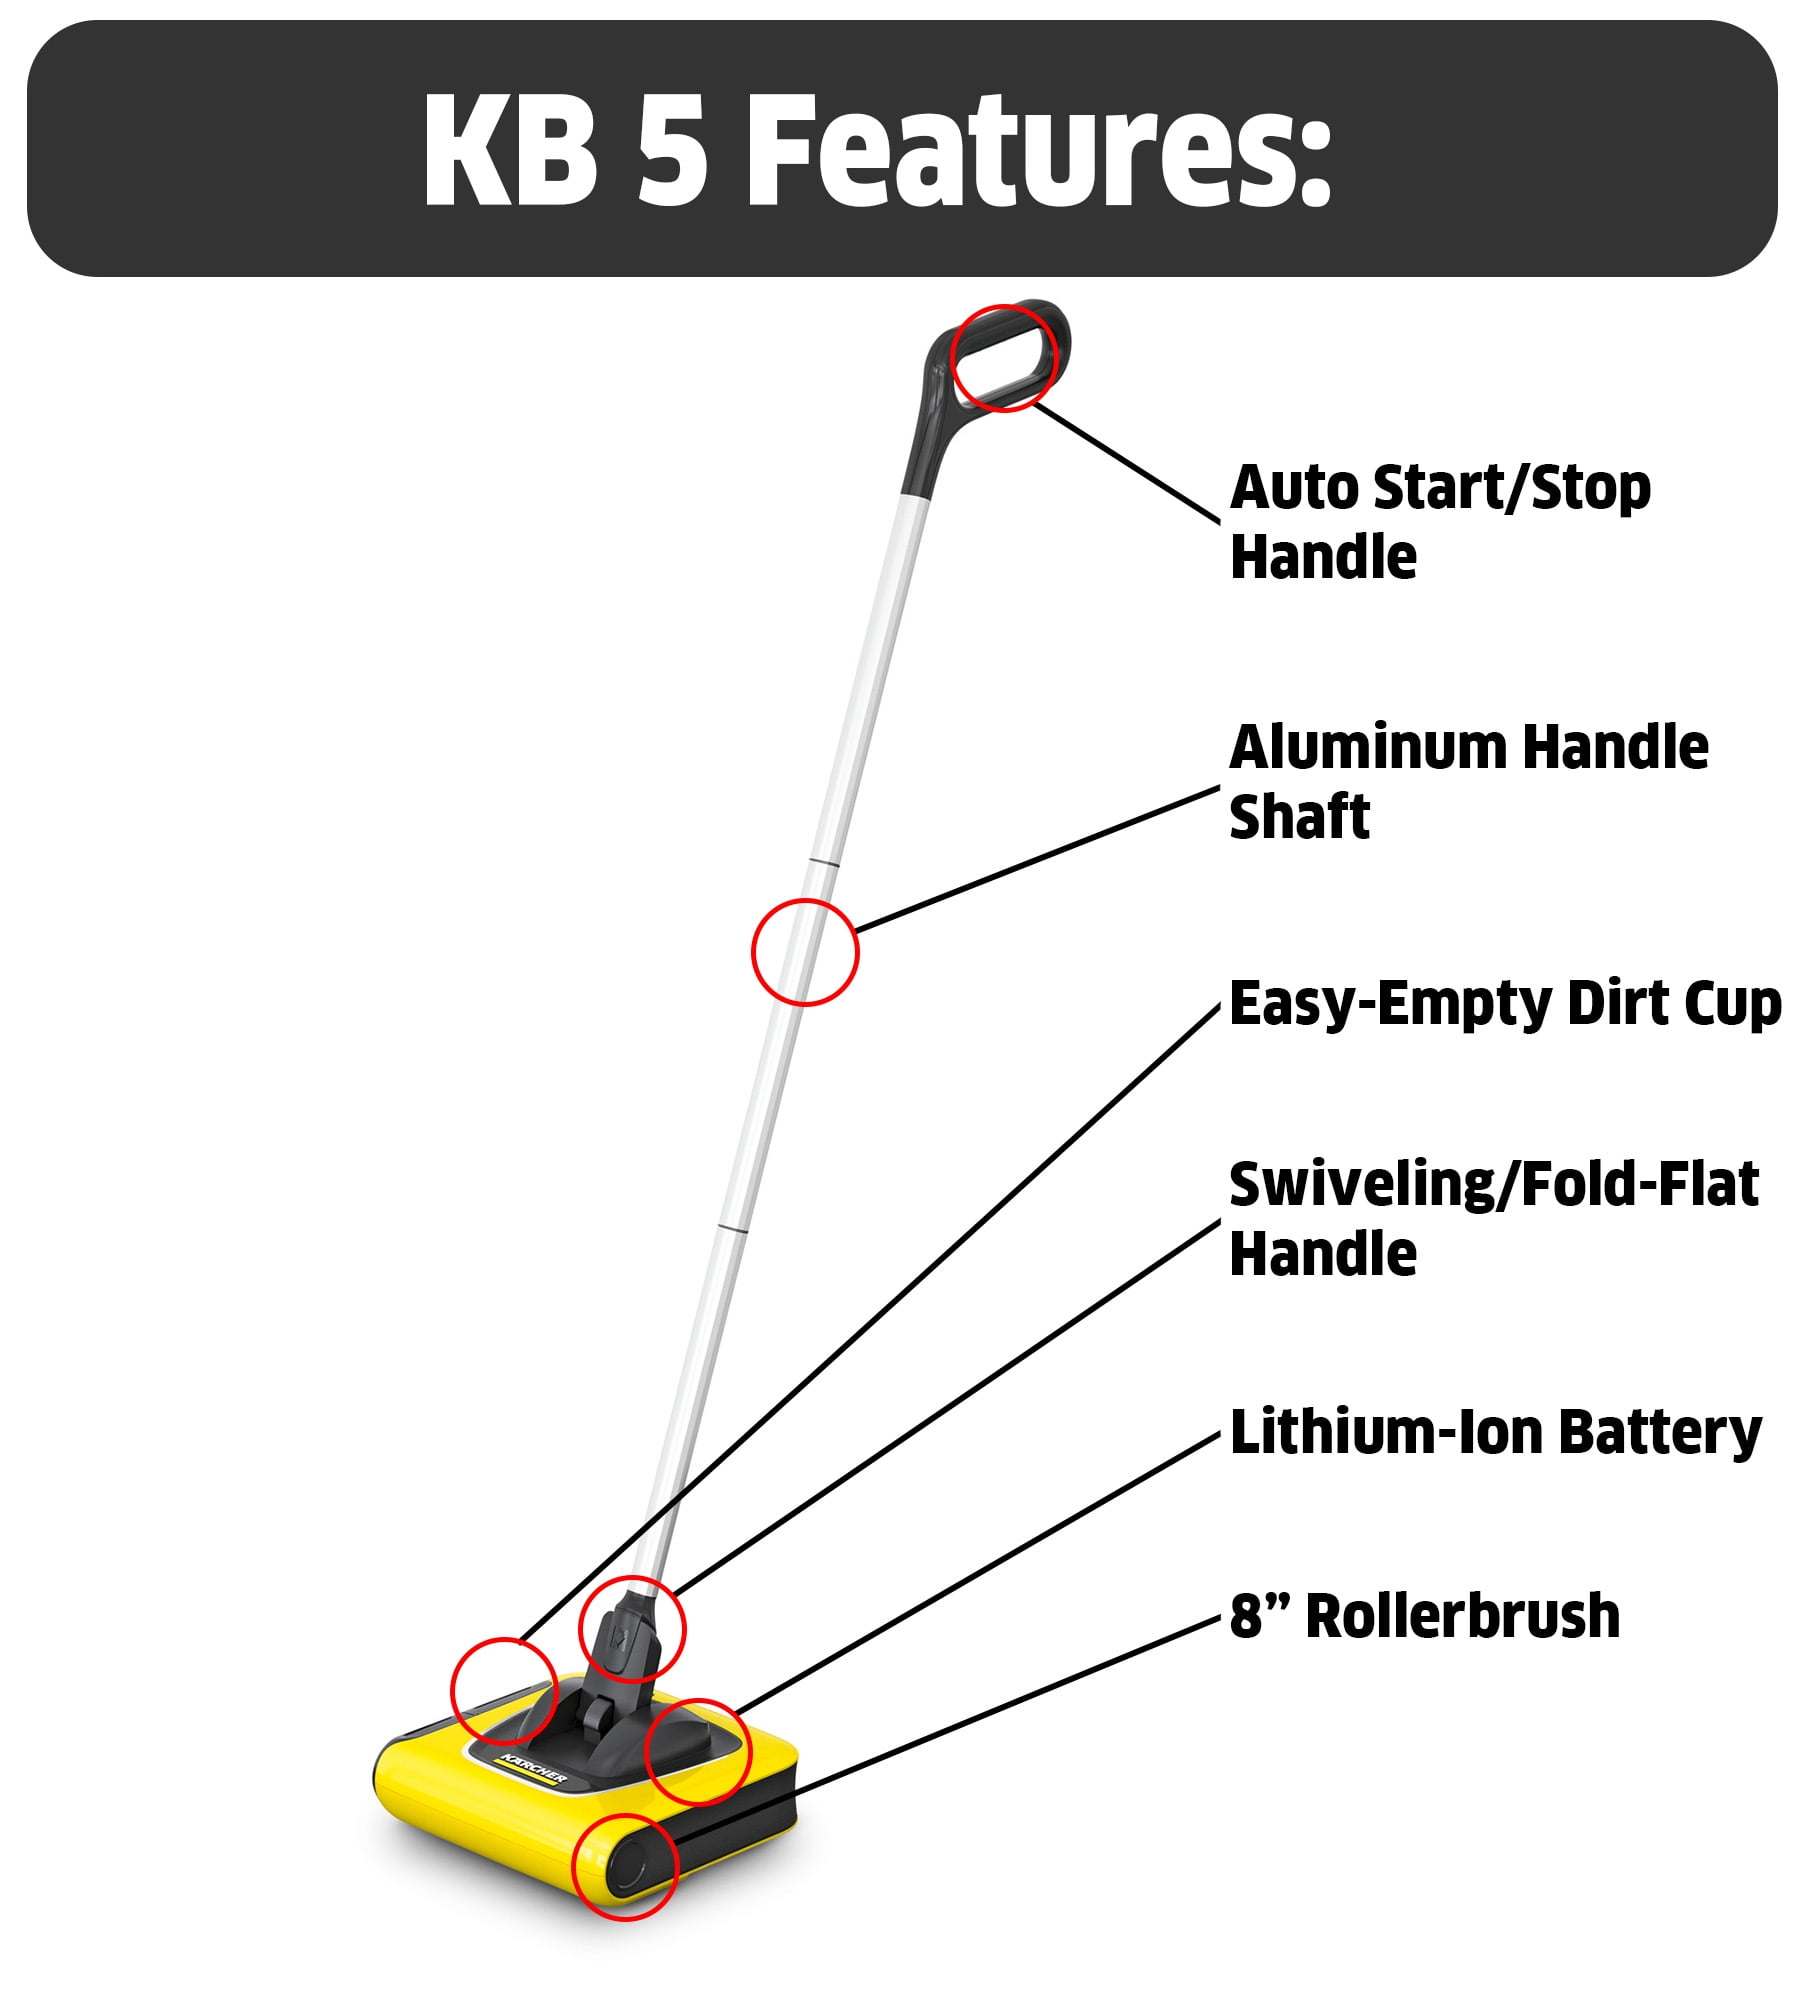 Karcher KB5 Cordless Sweeper